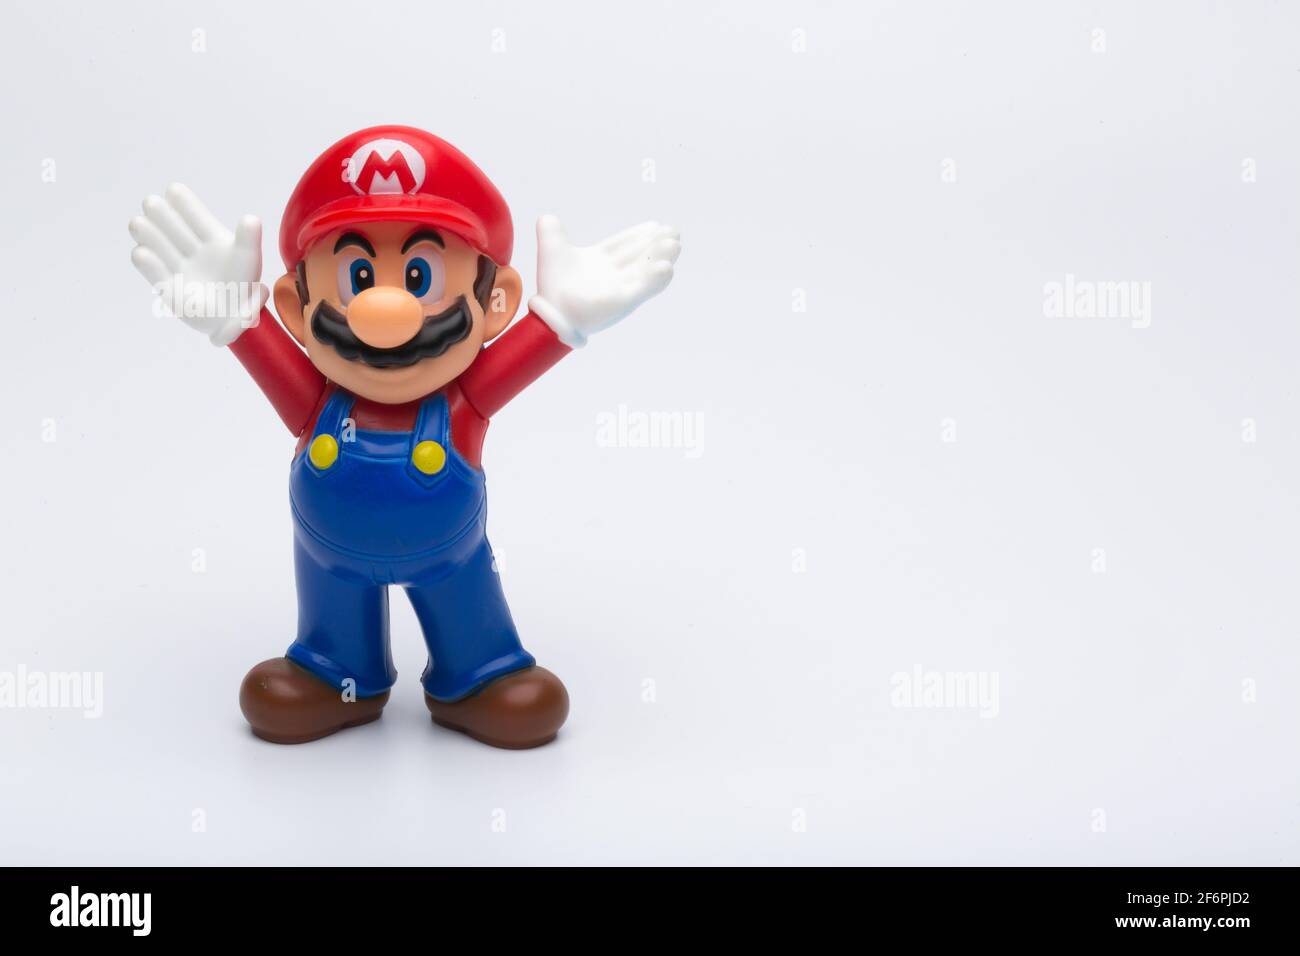 Mario bros cartoon hi-res stock photography and images - Alamy